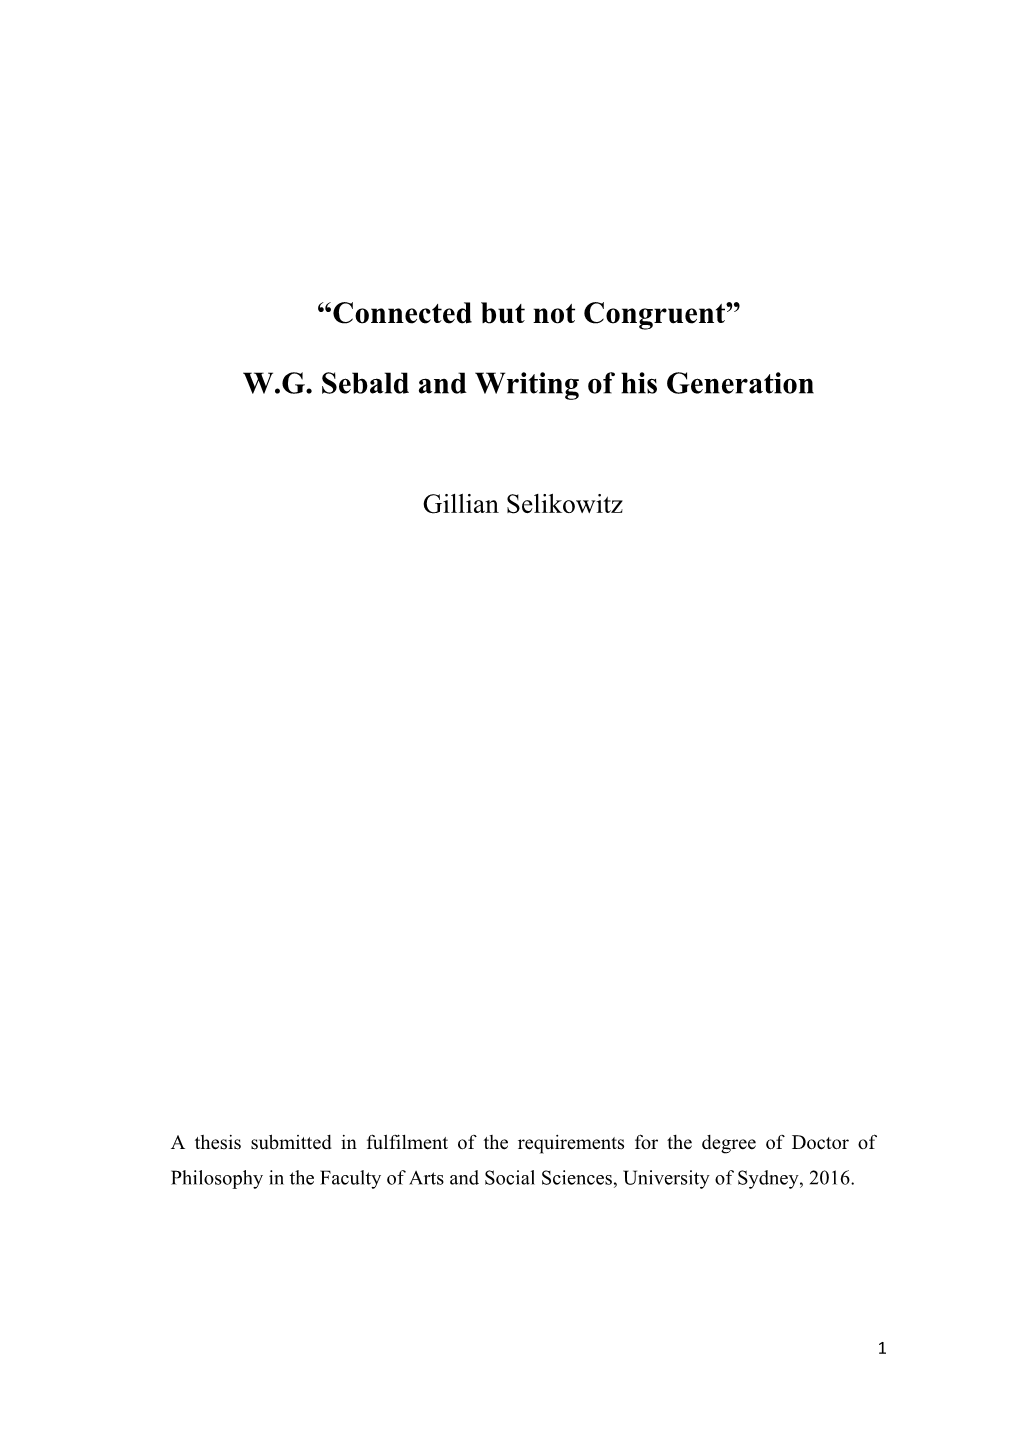 WG Sebald and Writing of His Generation